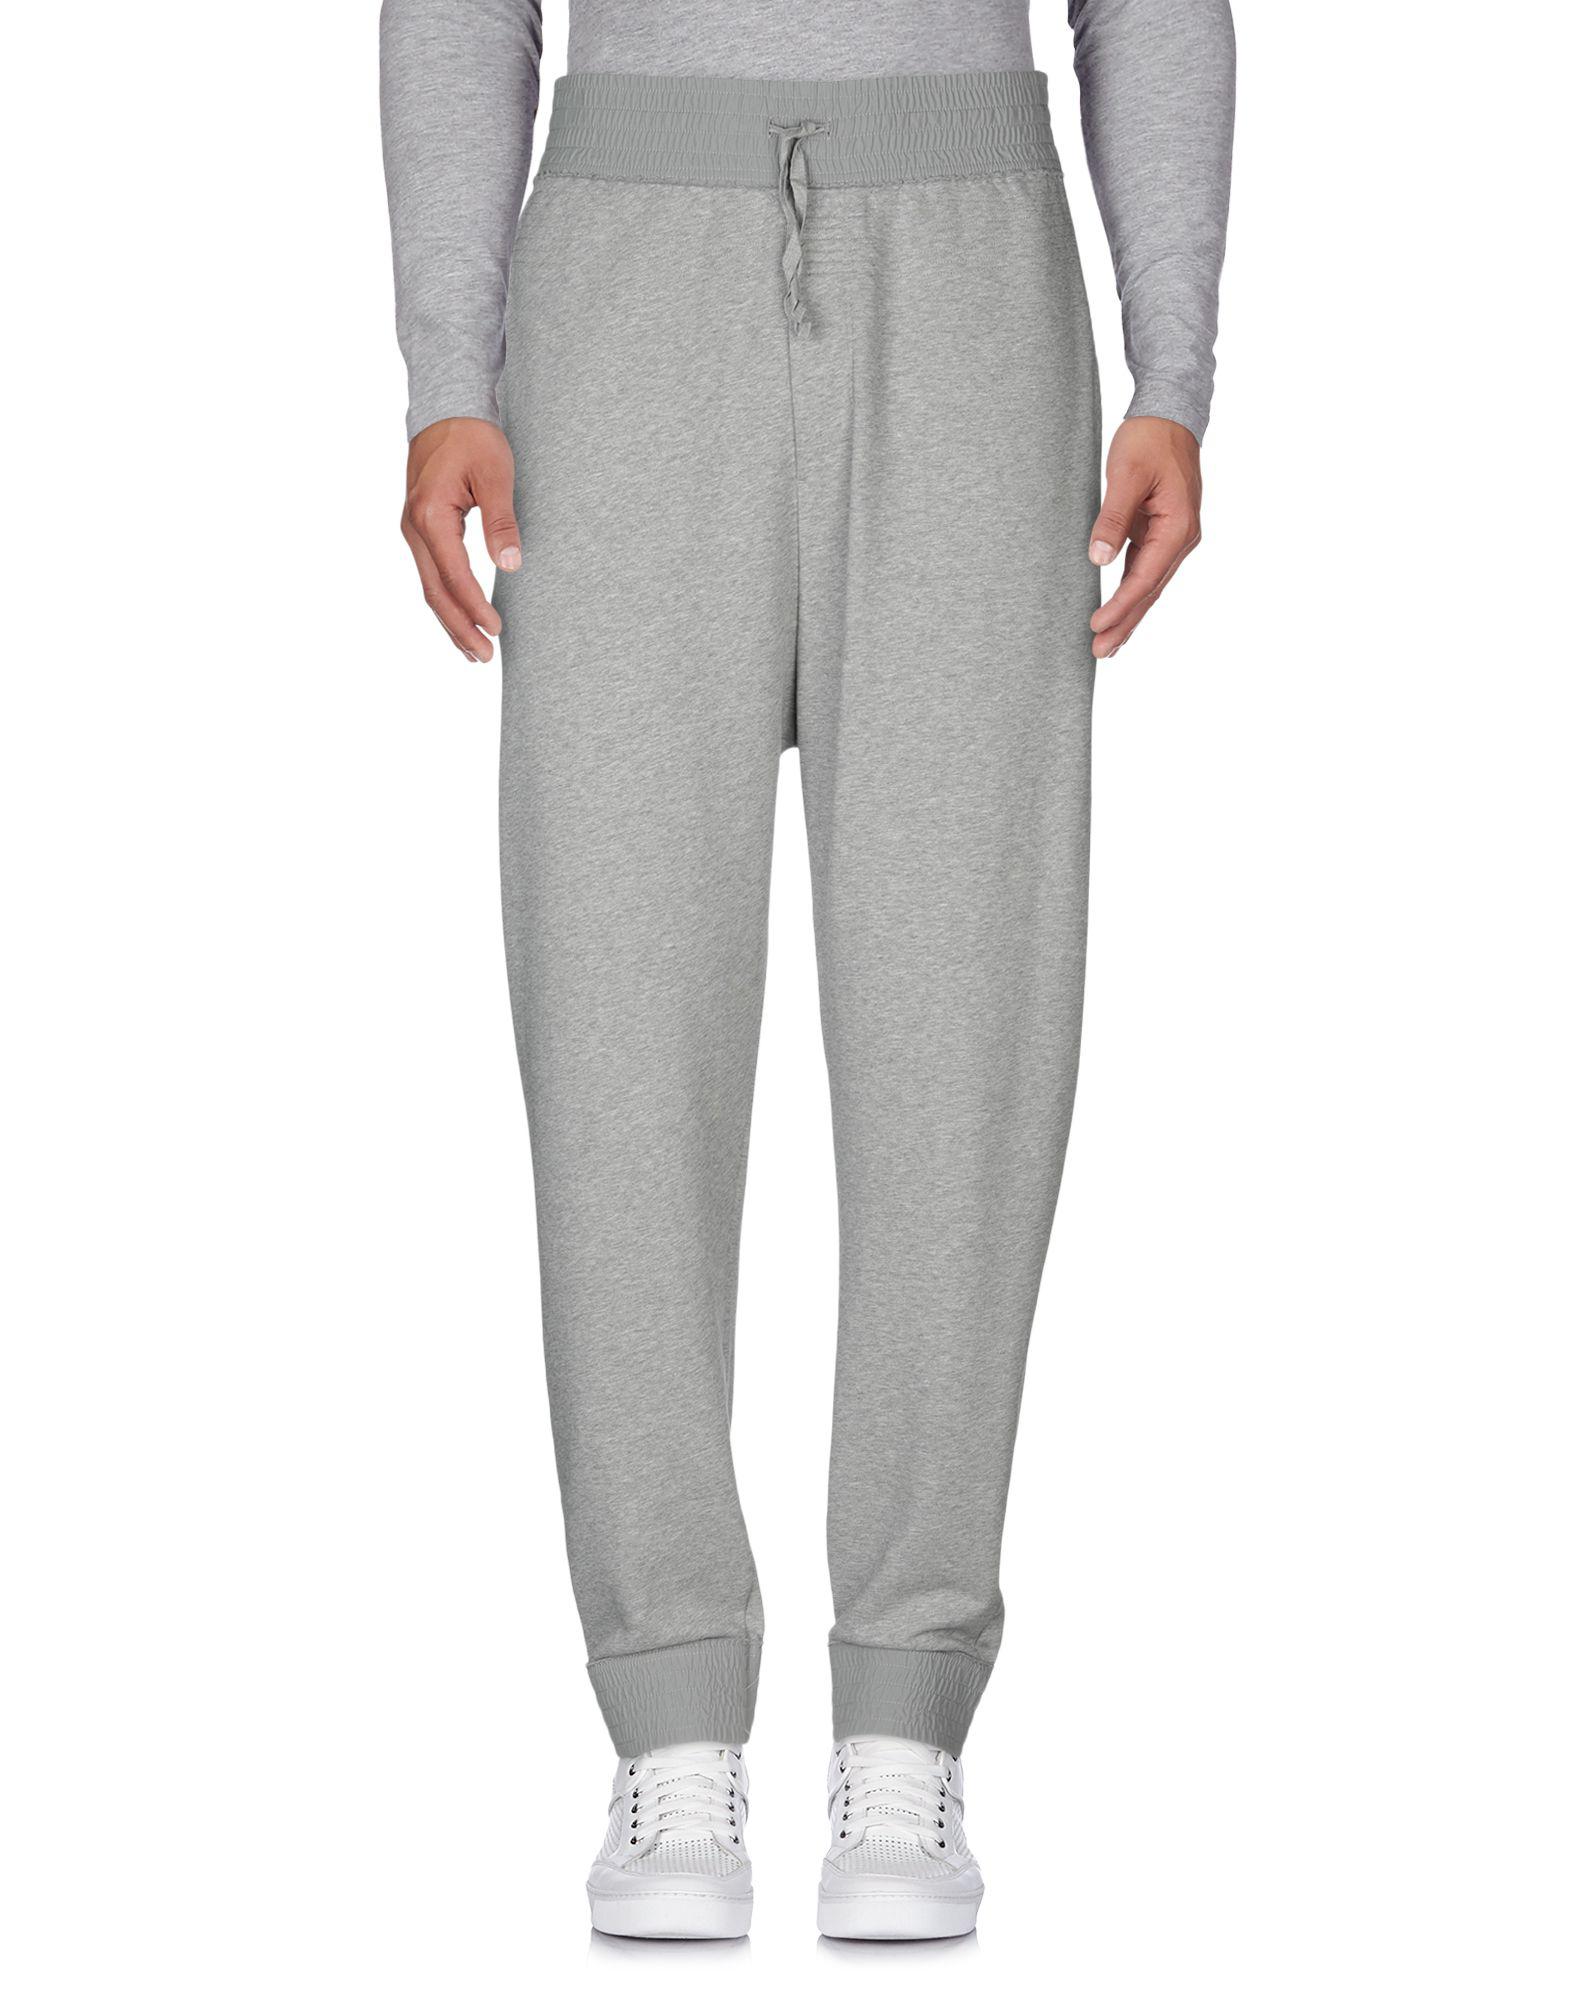 Damir Doma Fleece Casual Pants in Light Grey (Gray) for Men - Lyst